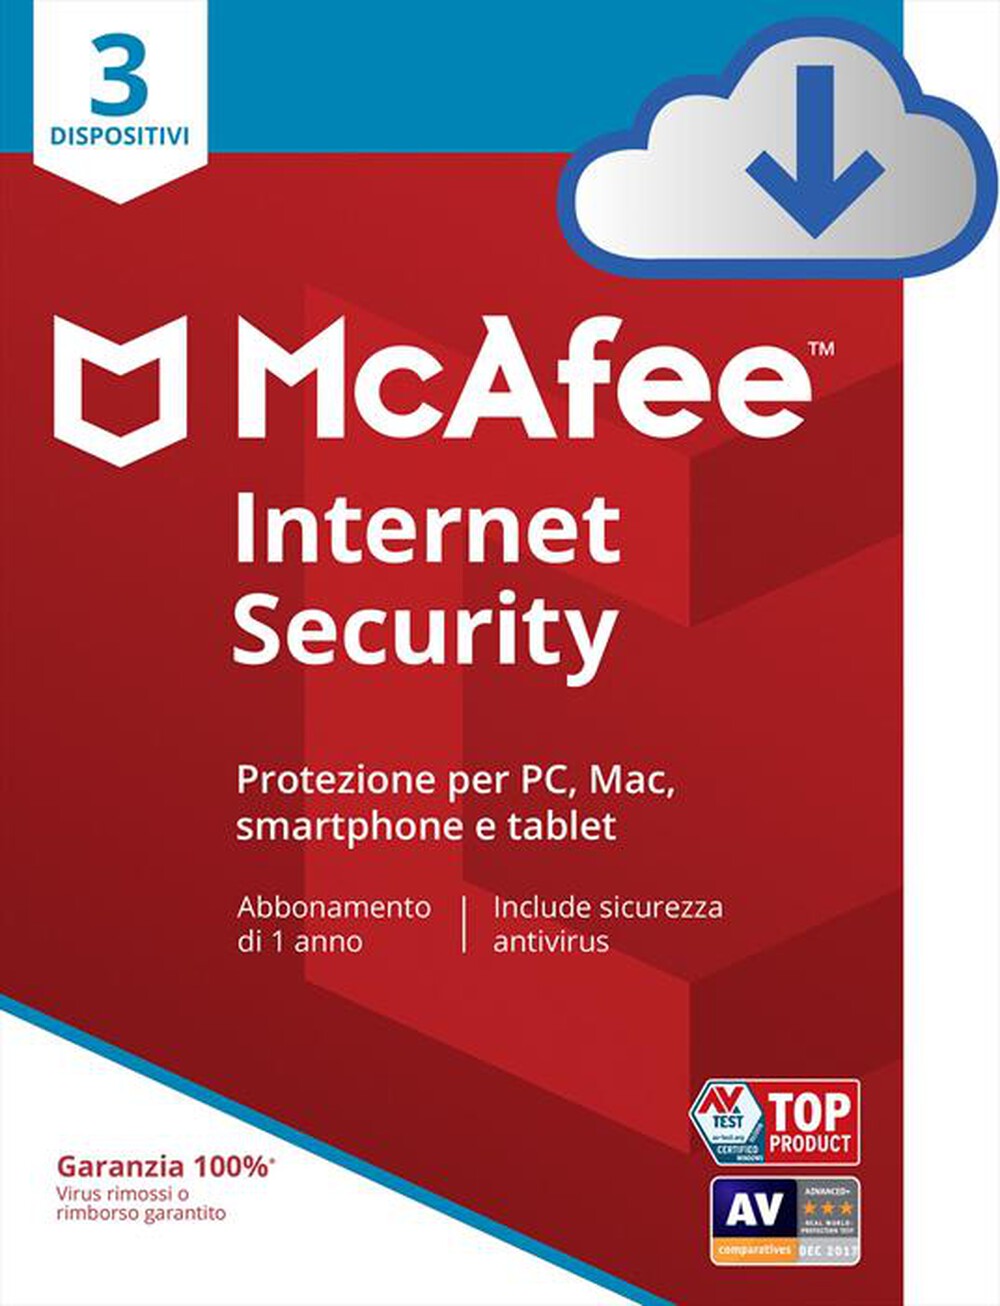 "MCAFEE - Internet Security 3D"